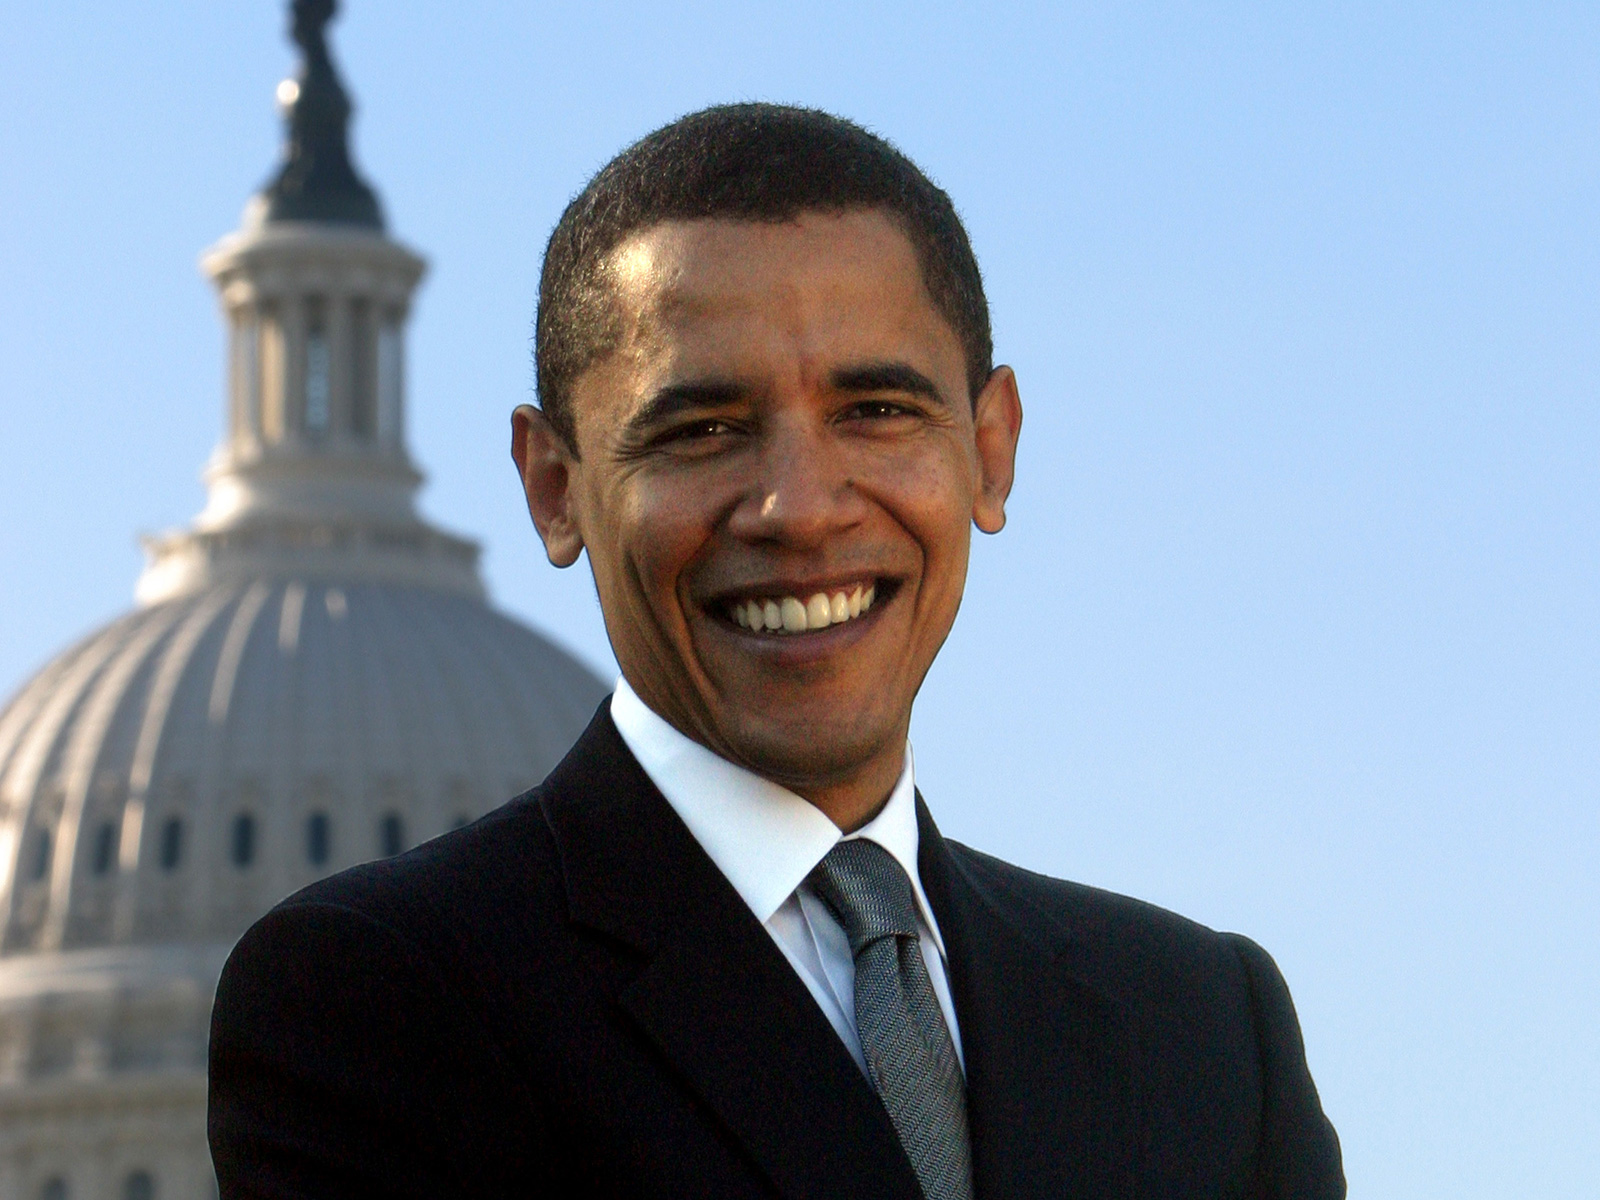 Barack Obama Wallpapers High Resolution and Quality DownloadBarack